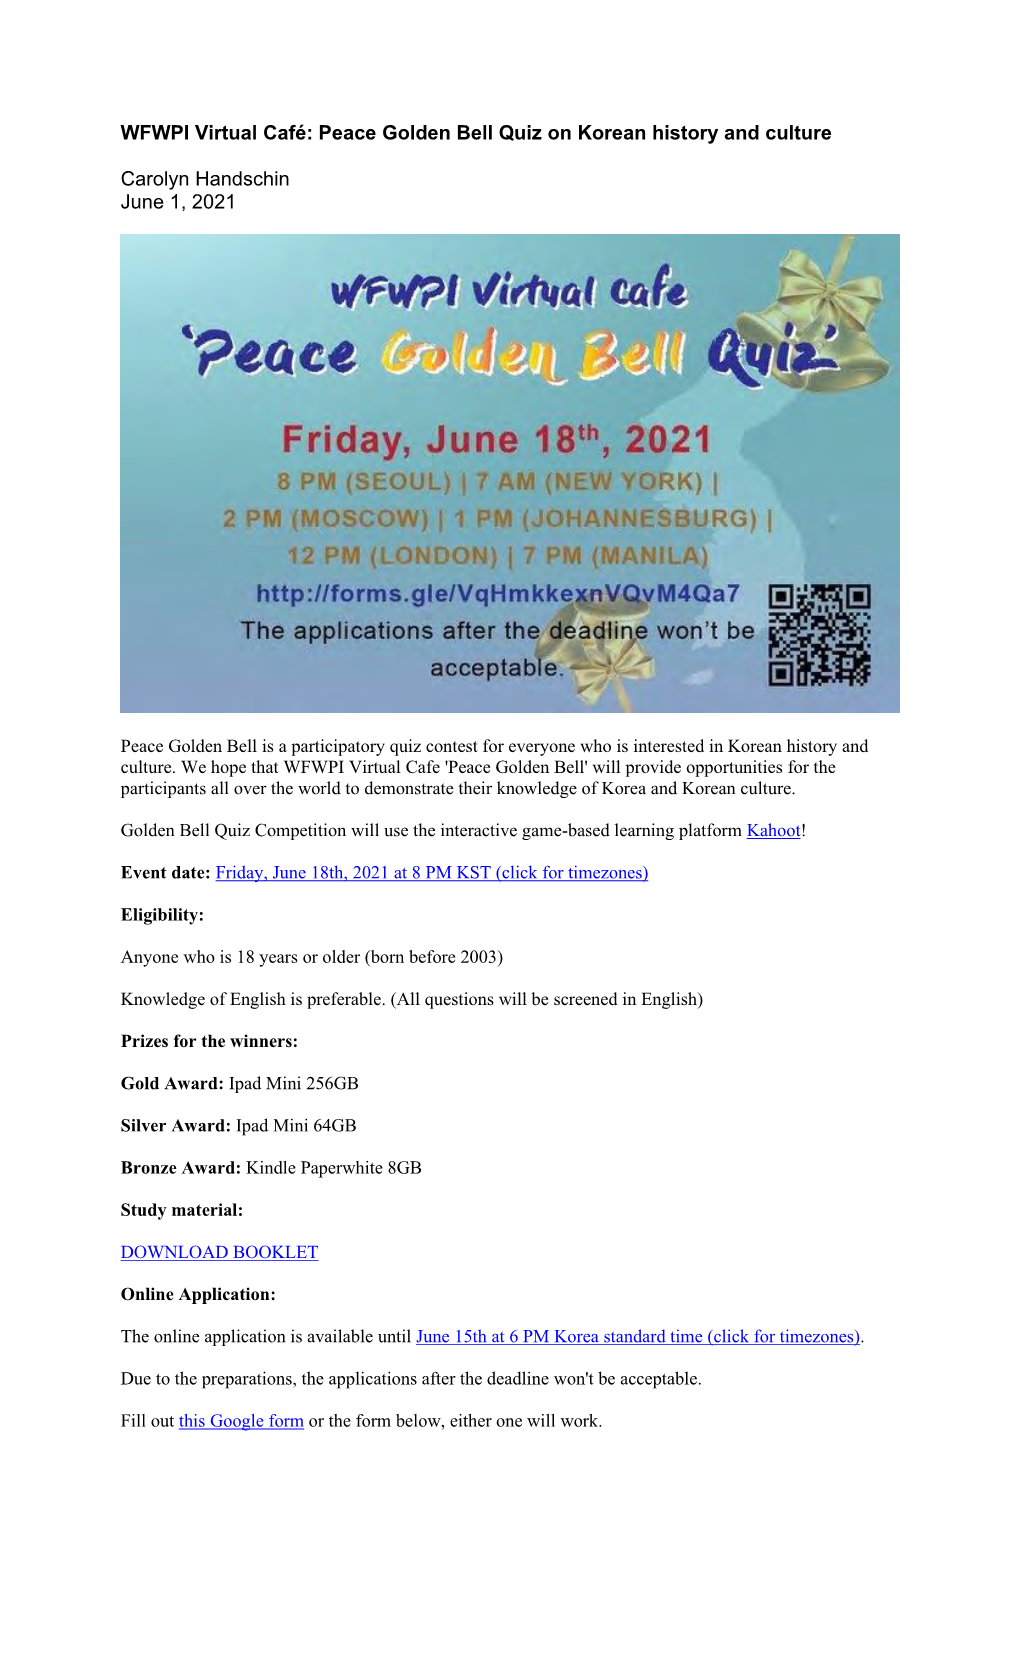 WFWPI Virtual Café: Peace Golden Bell Quiz on Korean History and Culture